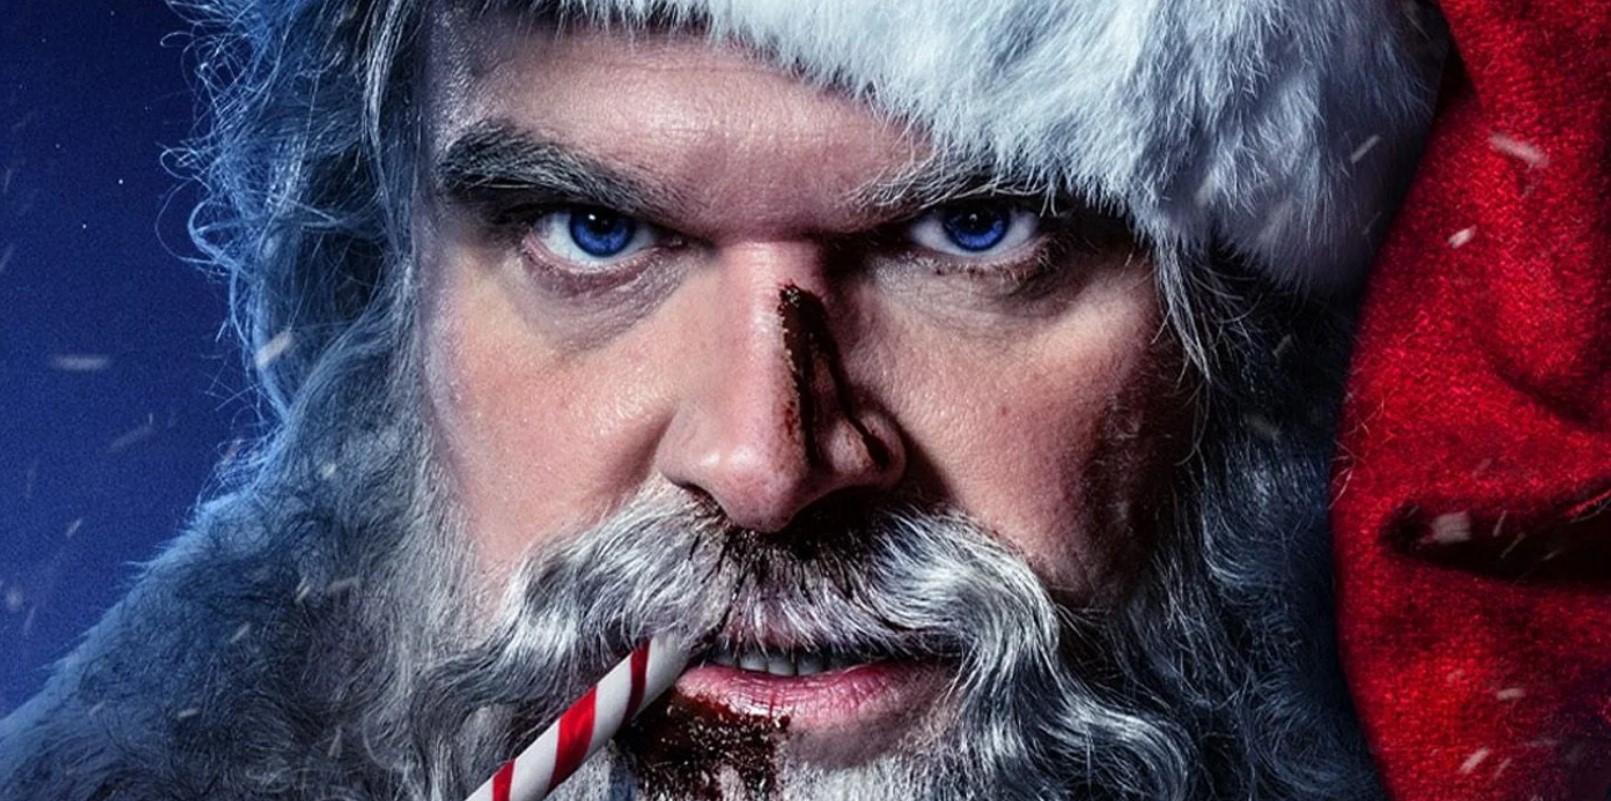 David Harbour in 'Violent Night' is Making the Internet Reconsider Their Santa Feelings